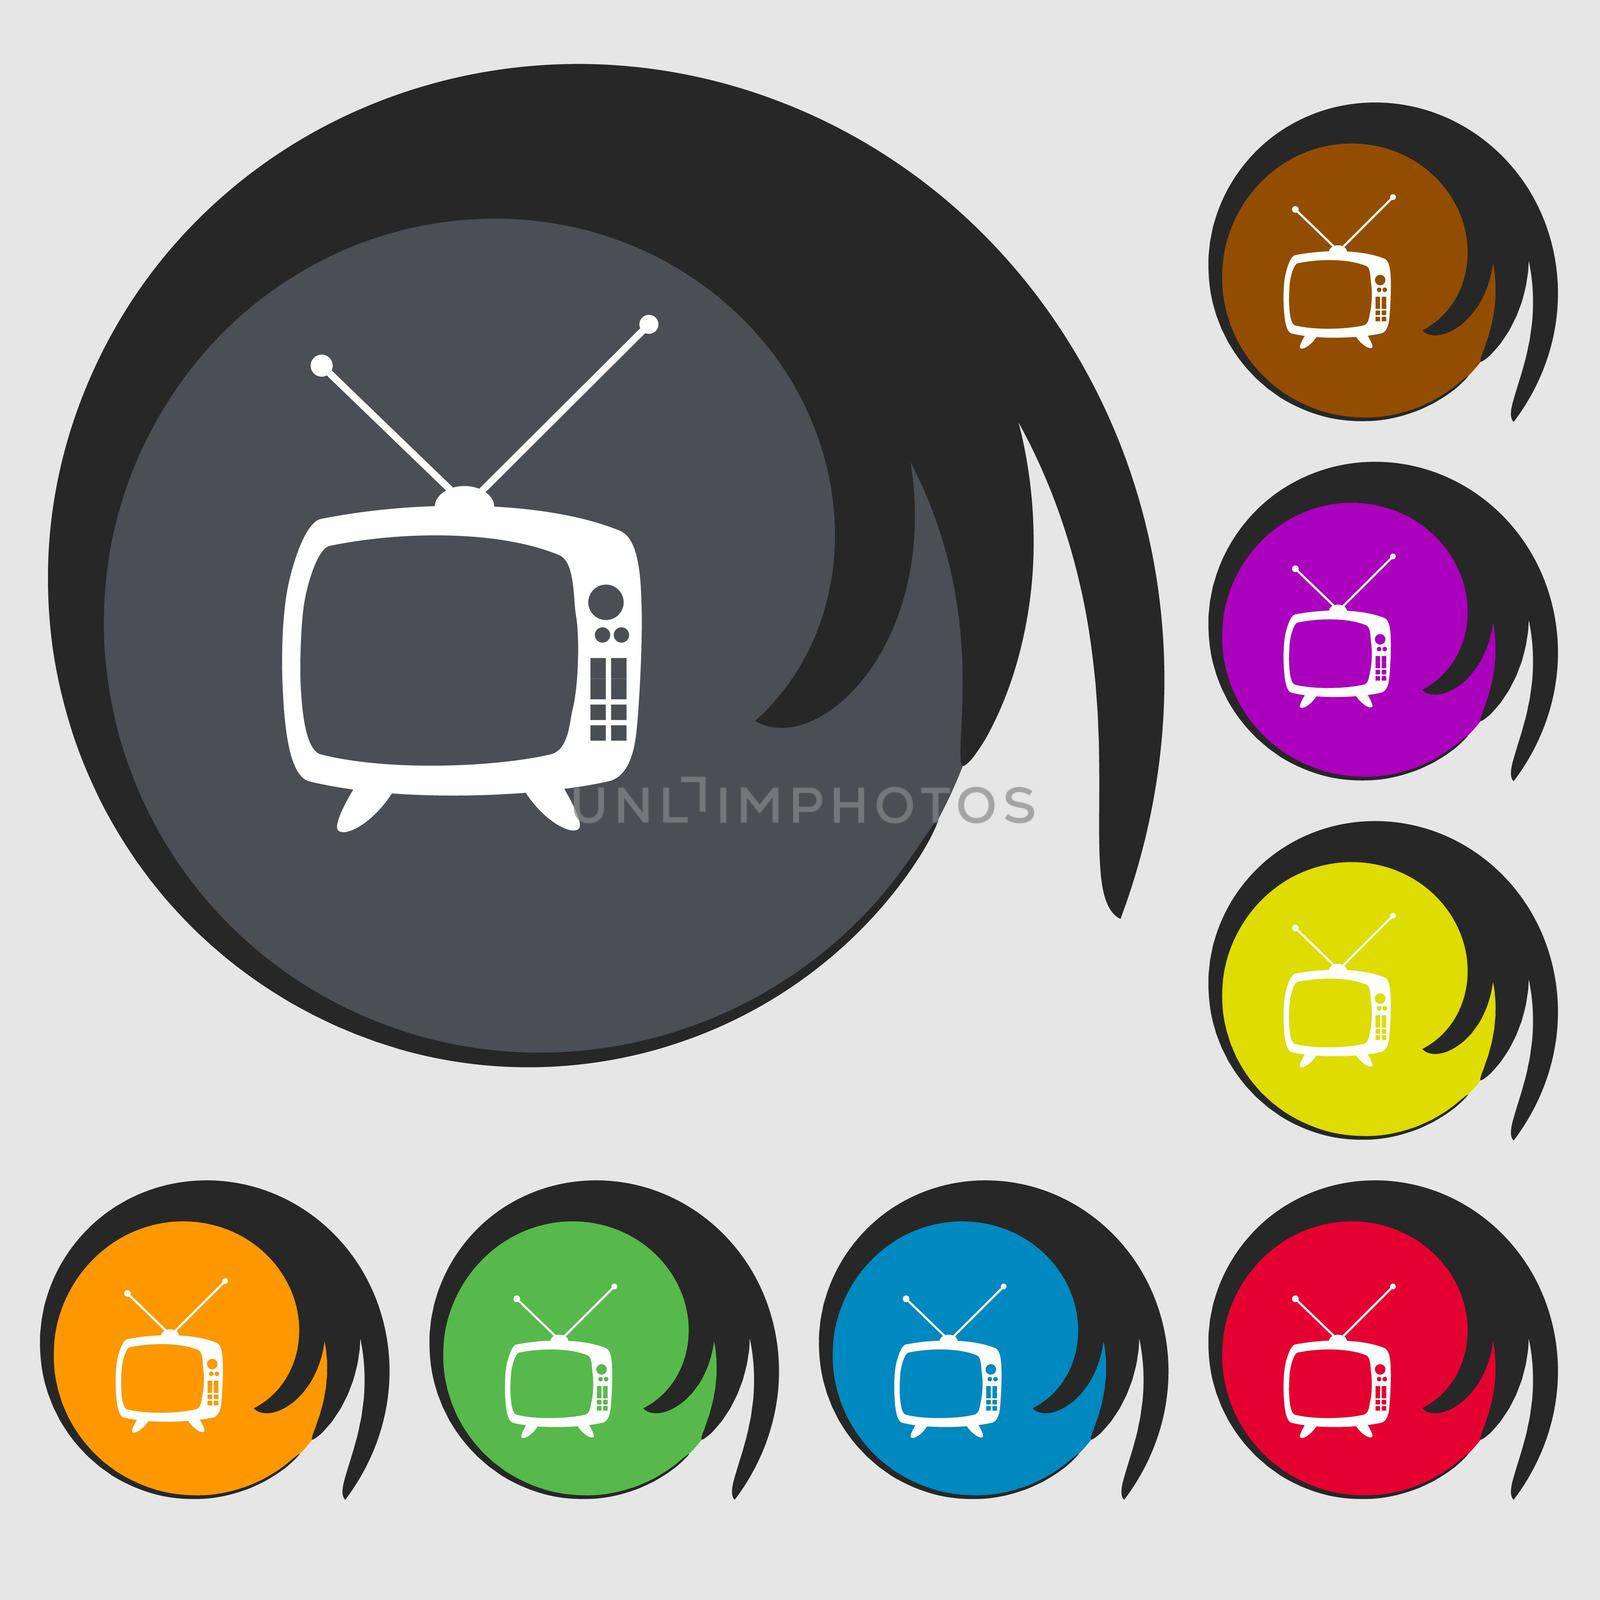 Retro TV mode sign icon. Television set symbol. Symbols on eight colored buttons. illustration